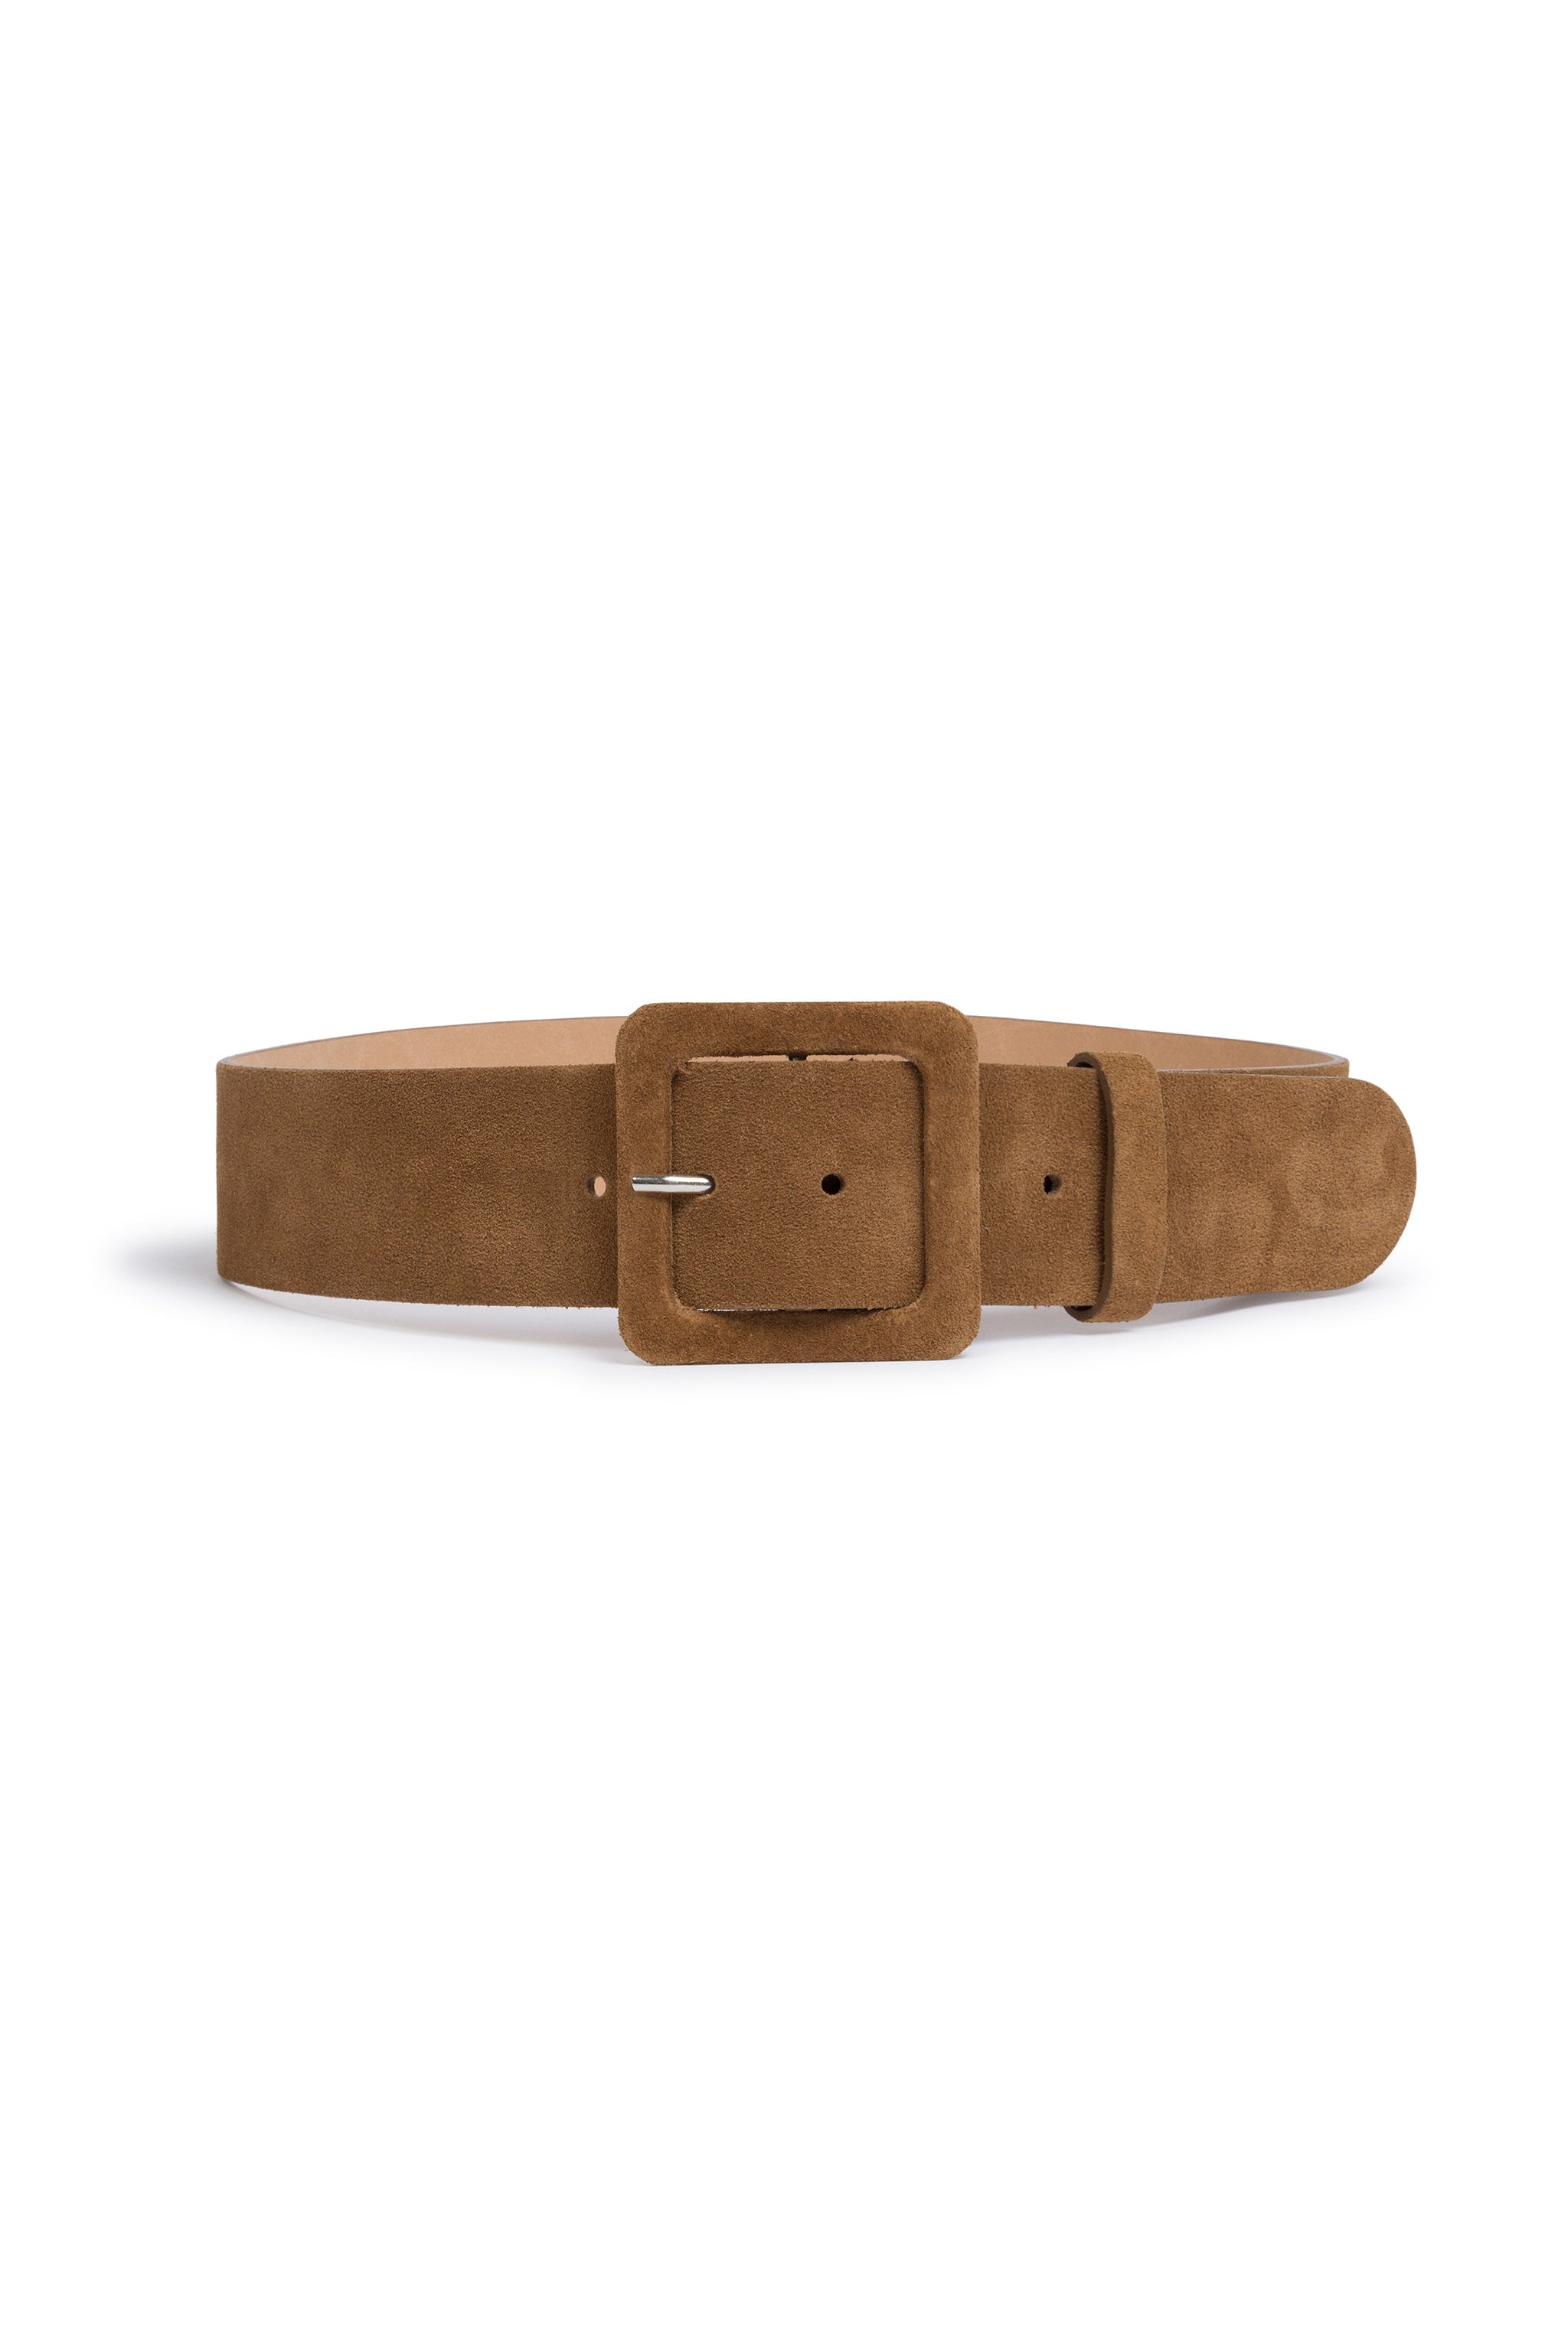 Suede Leather Waist Belt (Camel)